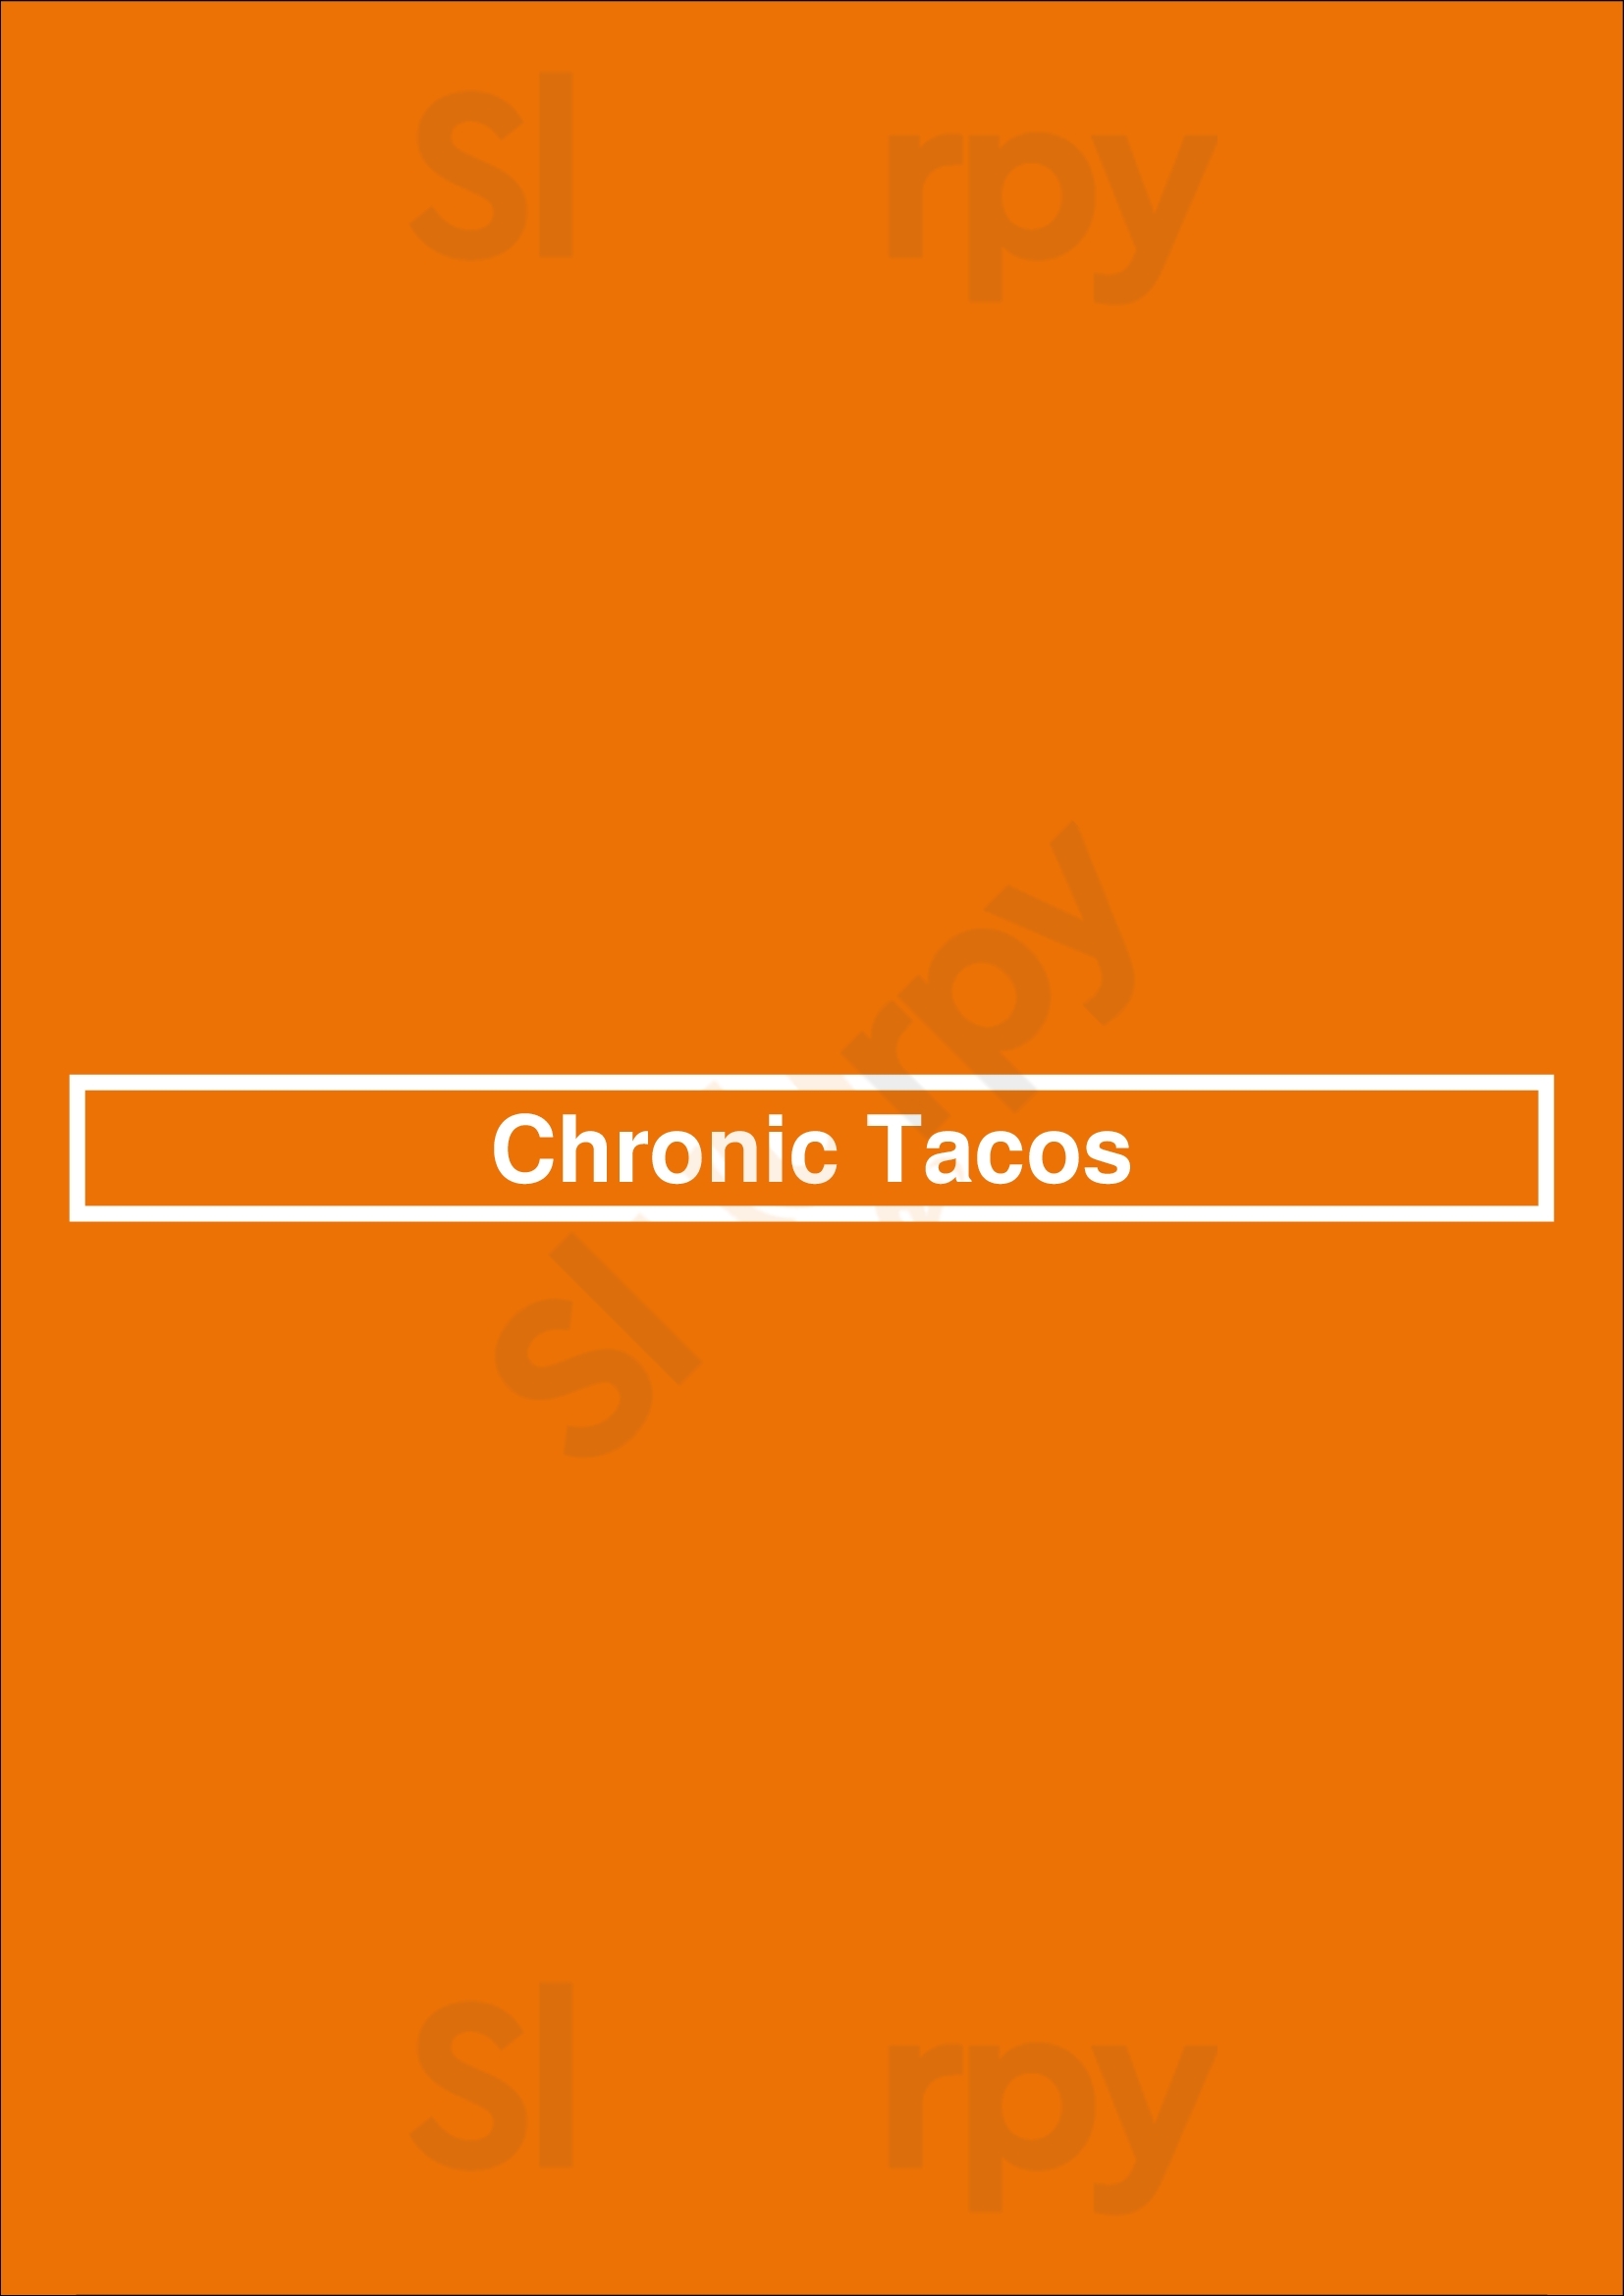 Chronic Tacos Huntington Beach Menu - 1